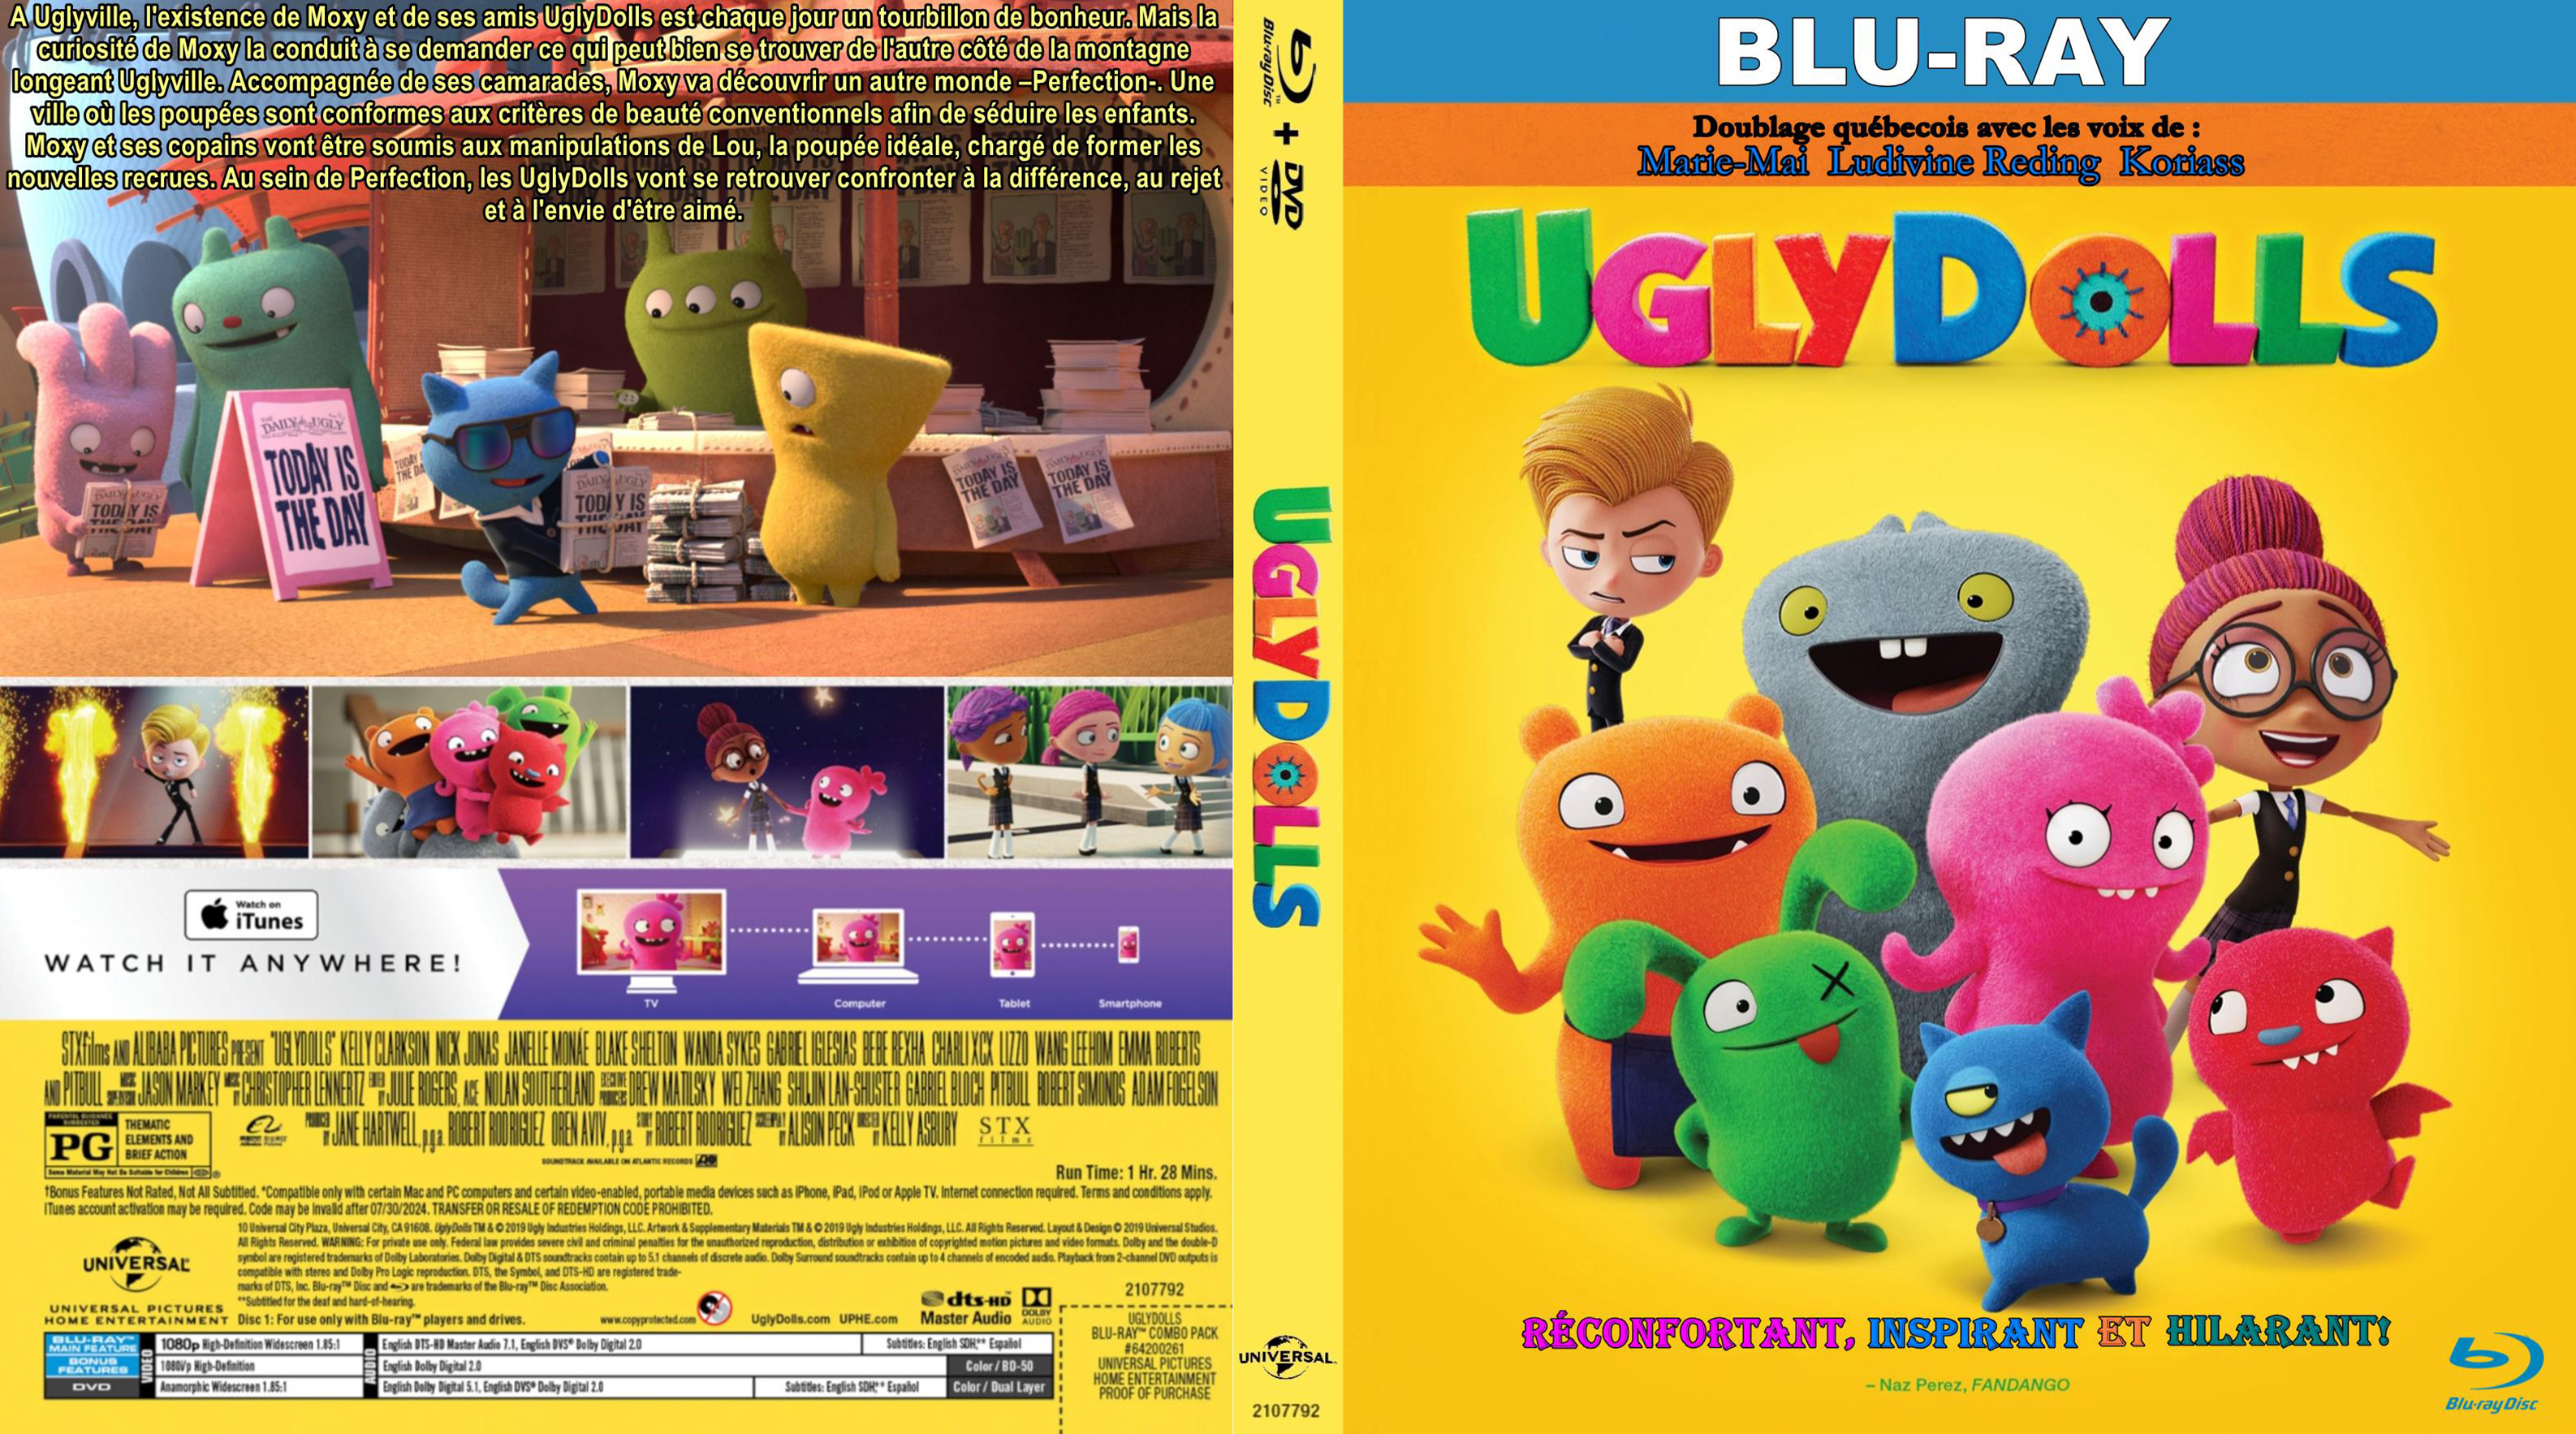 Jaquette DVD Ugly dolls custom (BLU-RAY)